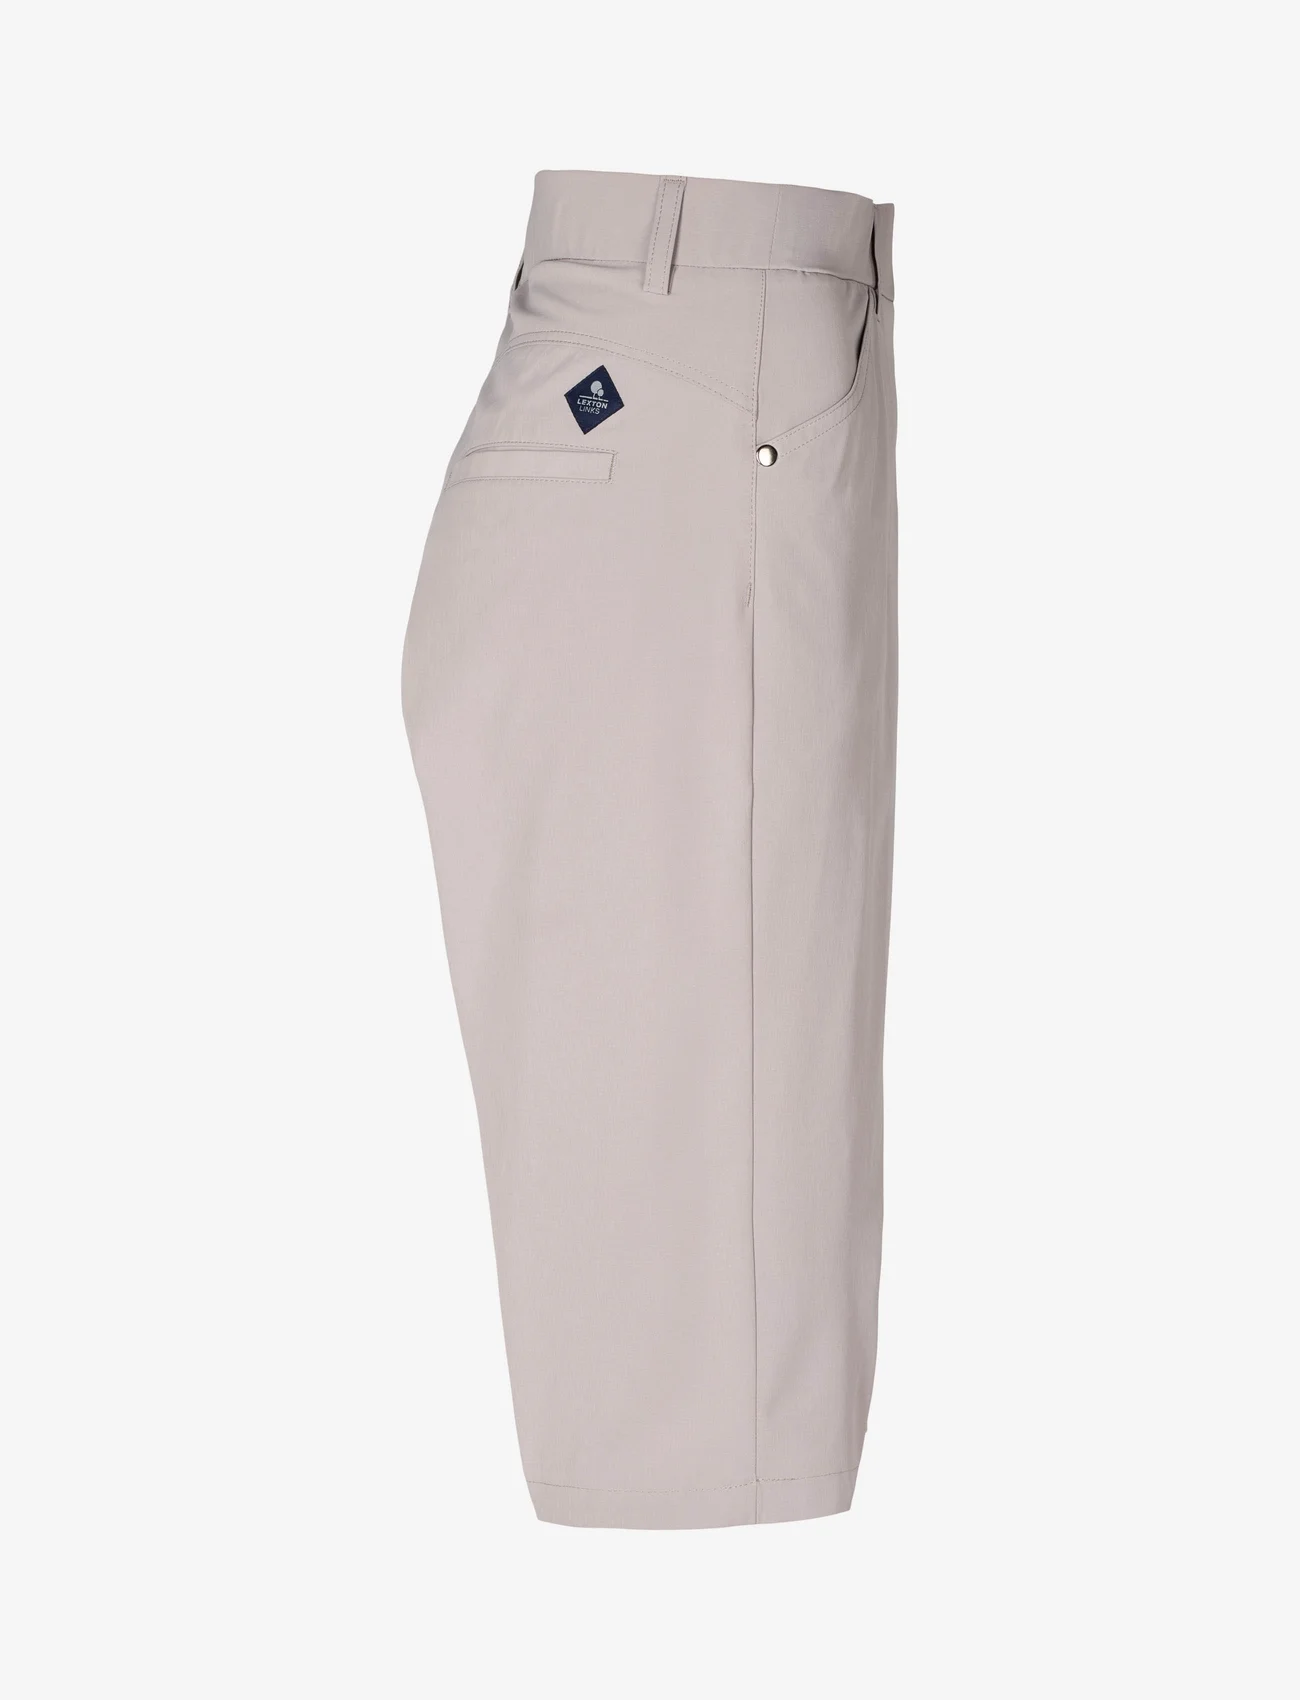 Lexton Links - Sandy Golf Shorts - szorty golfowe - light grey - 0